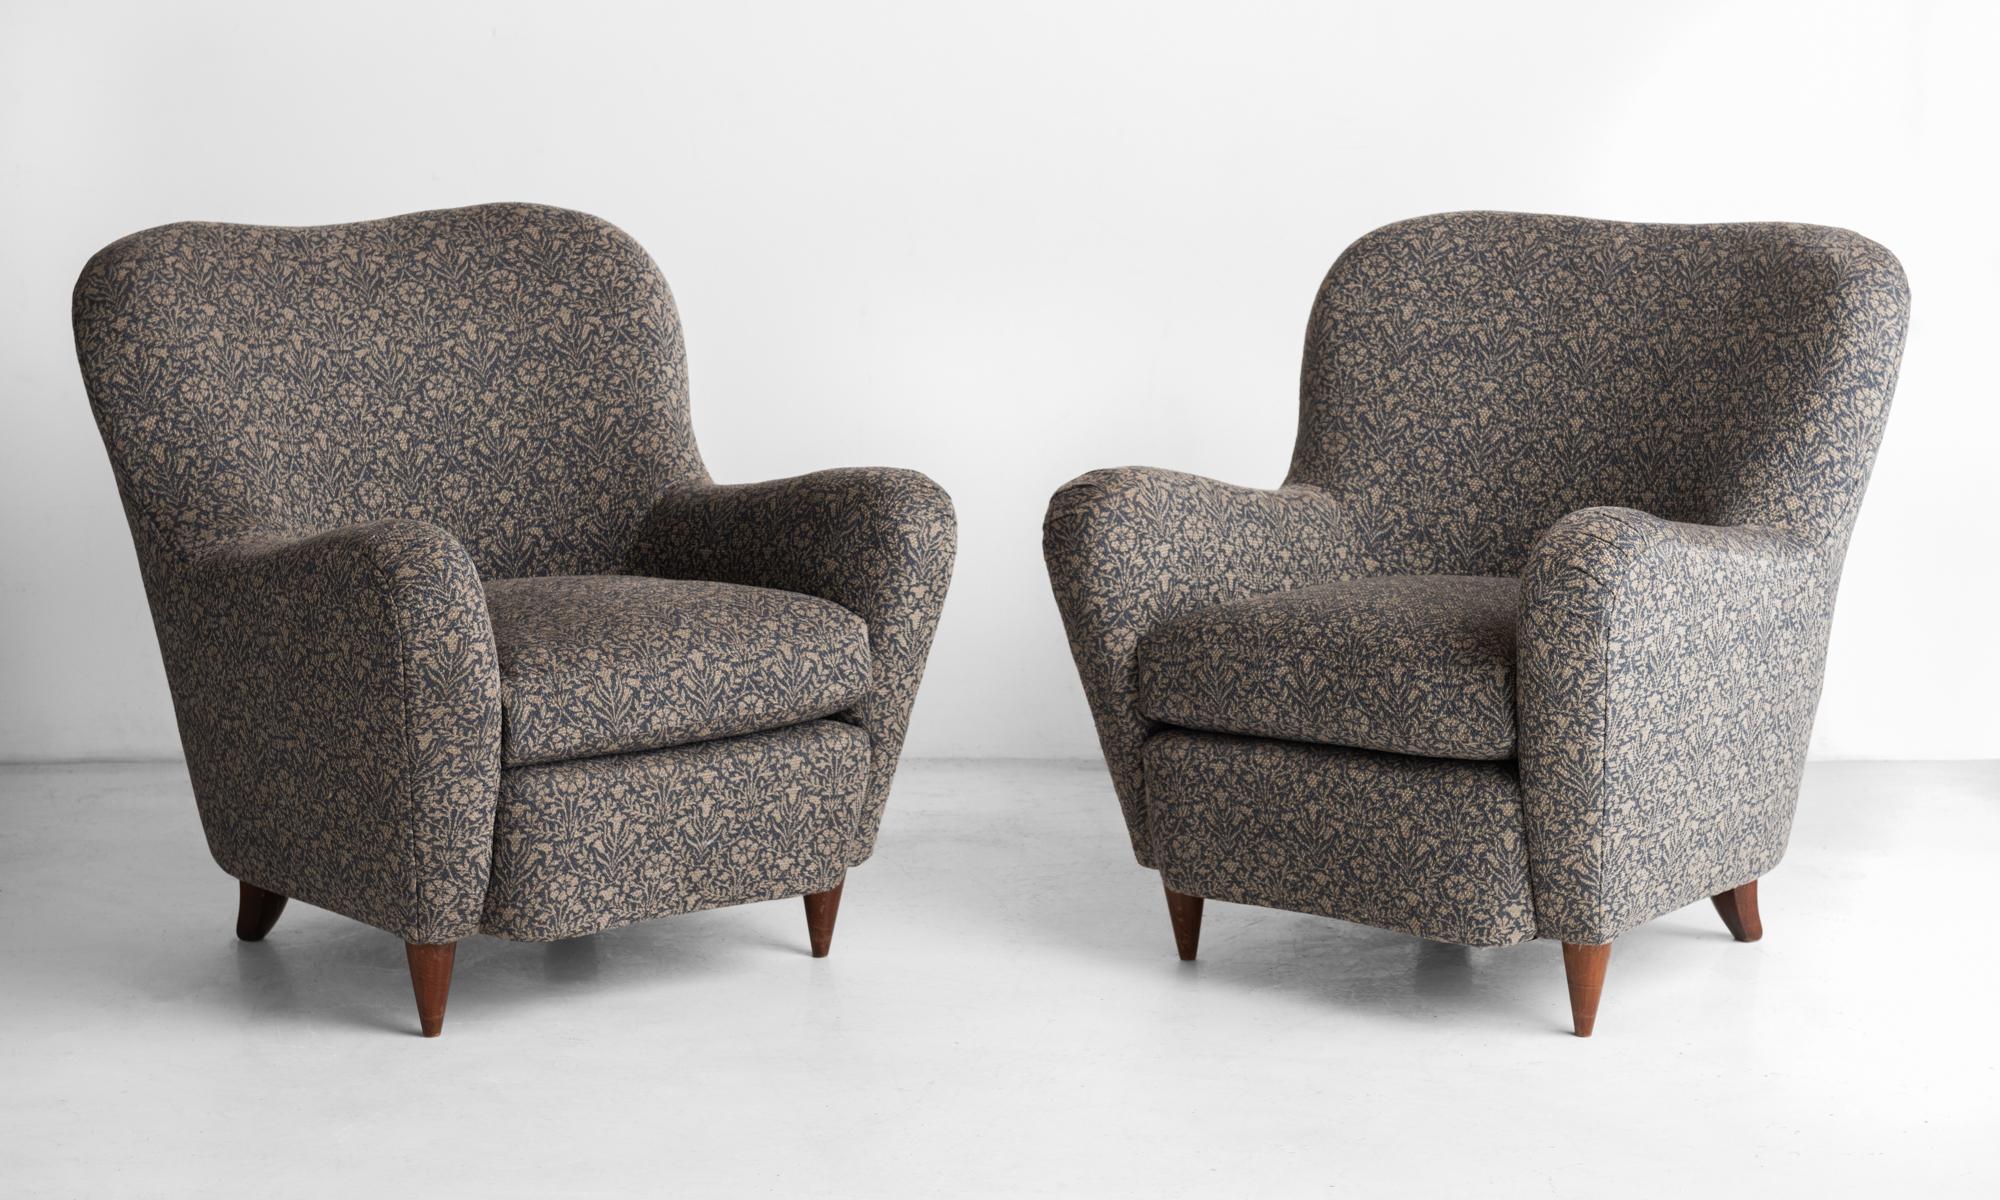 Armchairs by Luigi Saita, circa 1955

Elegant forms, newly upholstered in Morris & Co. fabric, on original walnut legs.